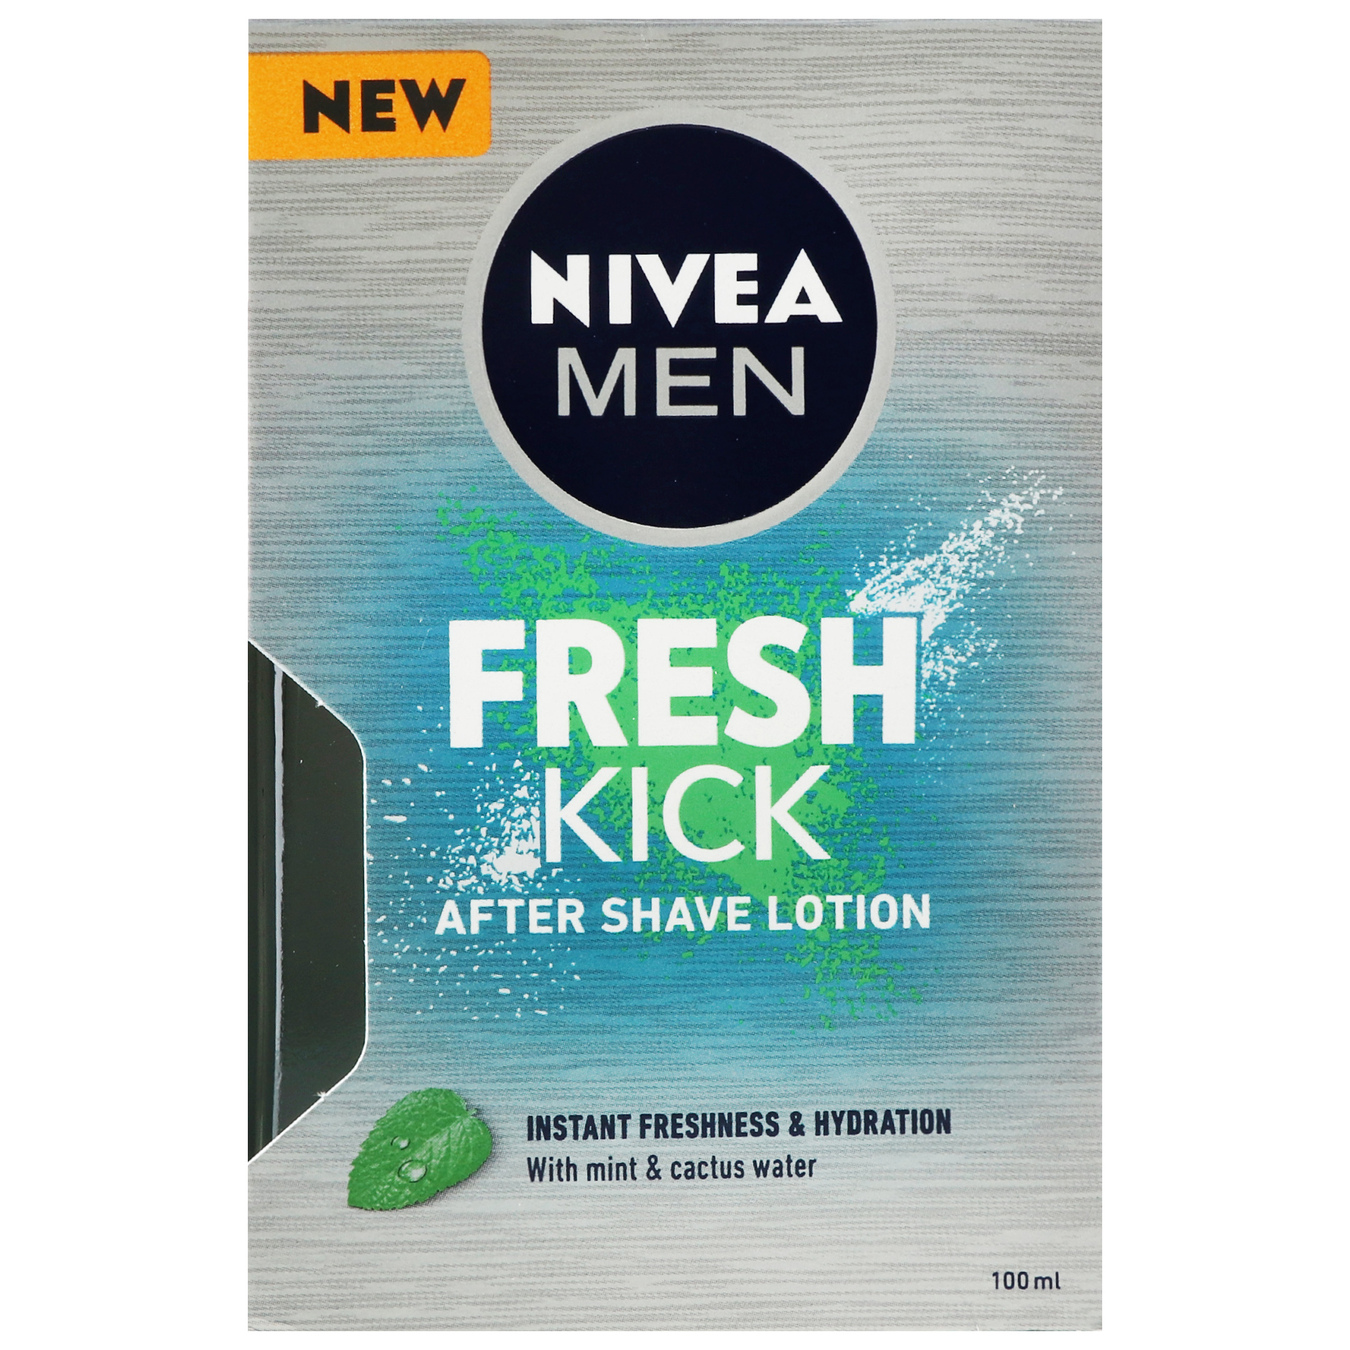 Nivea fresh kick men aftershave lotion 100 ml